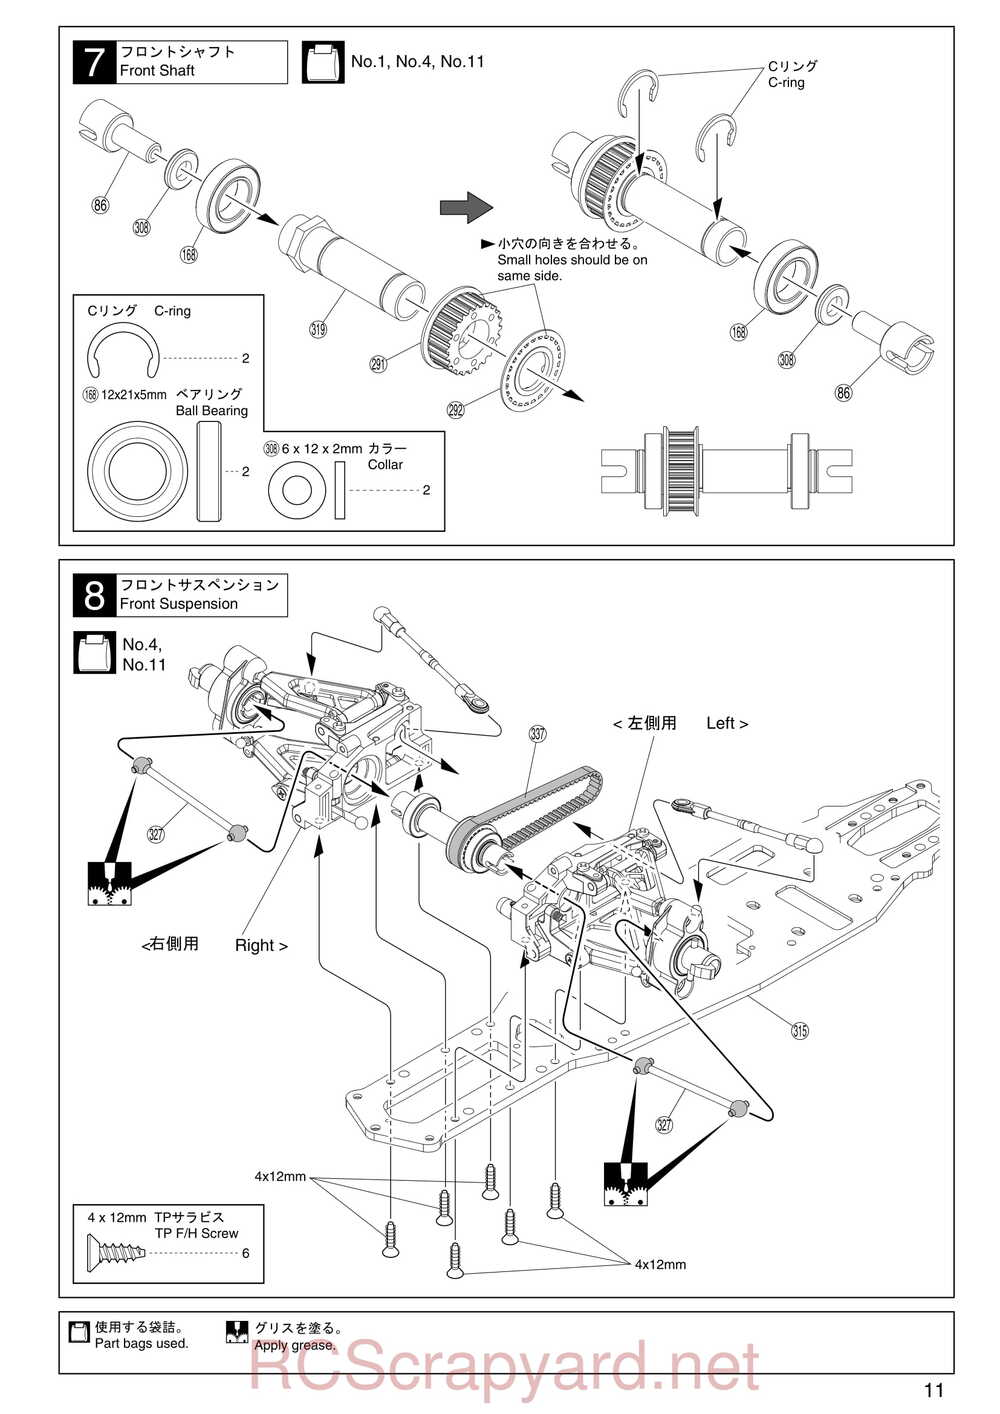 Kyosho - 31283 - Evolva-2003 - Manual - Page 11